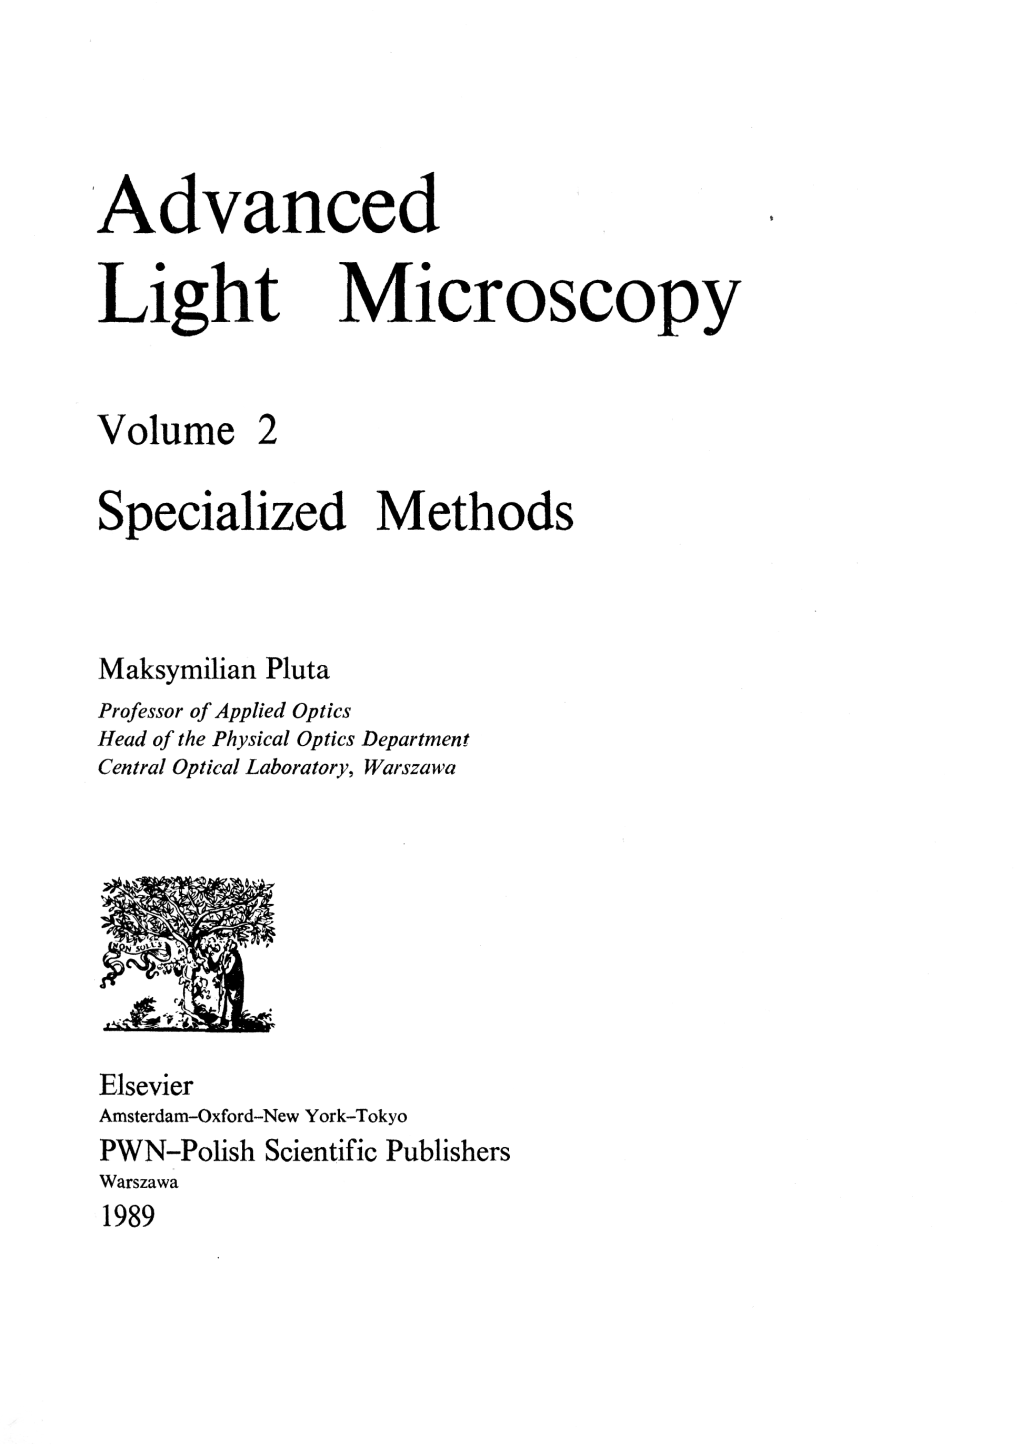 Advanced Light Microscopy